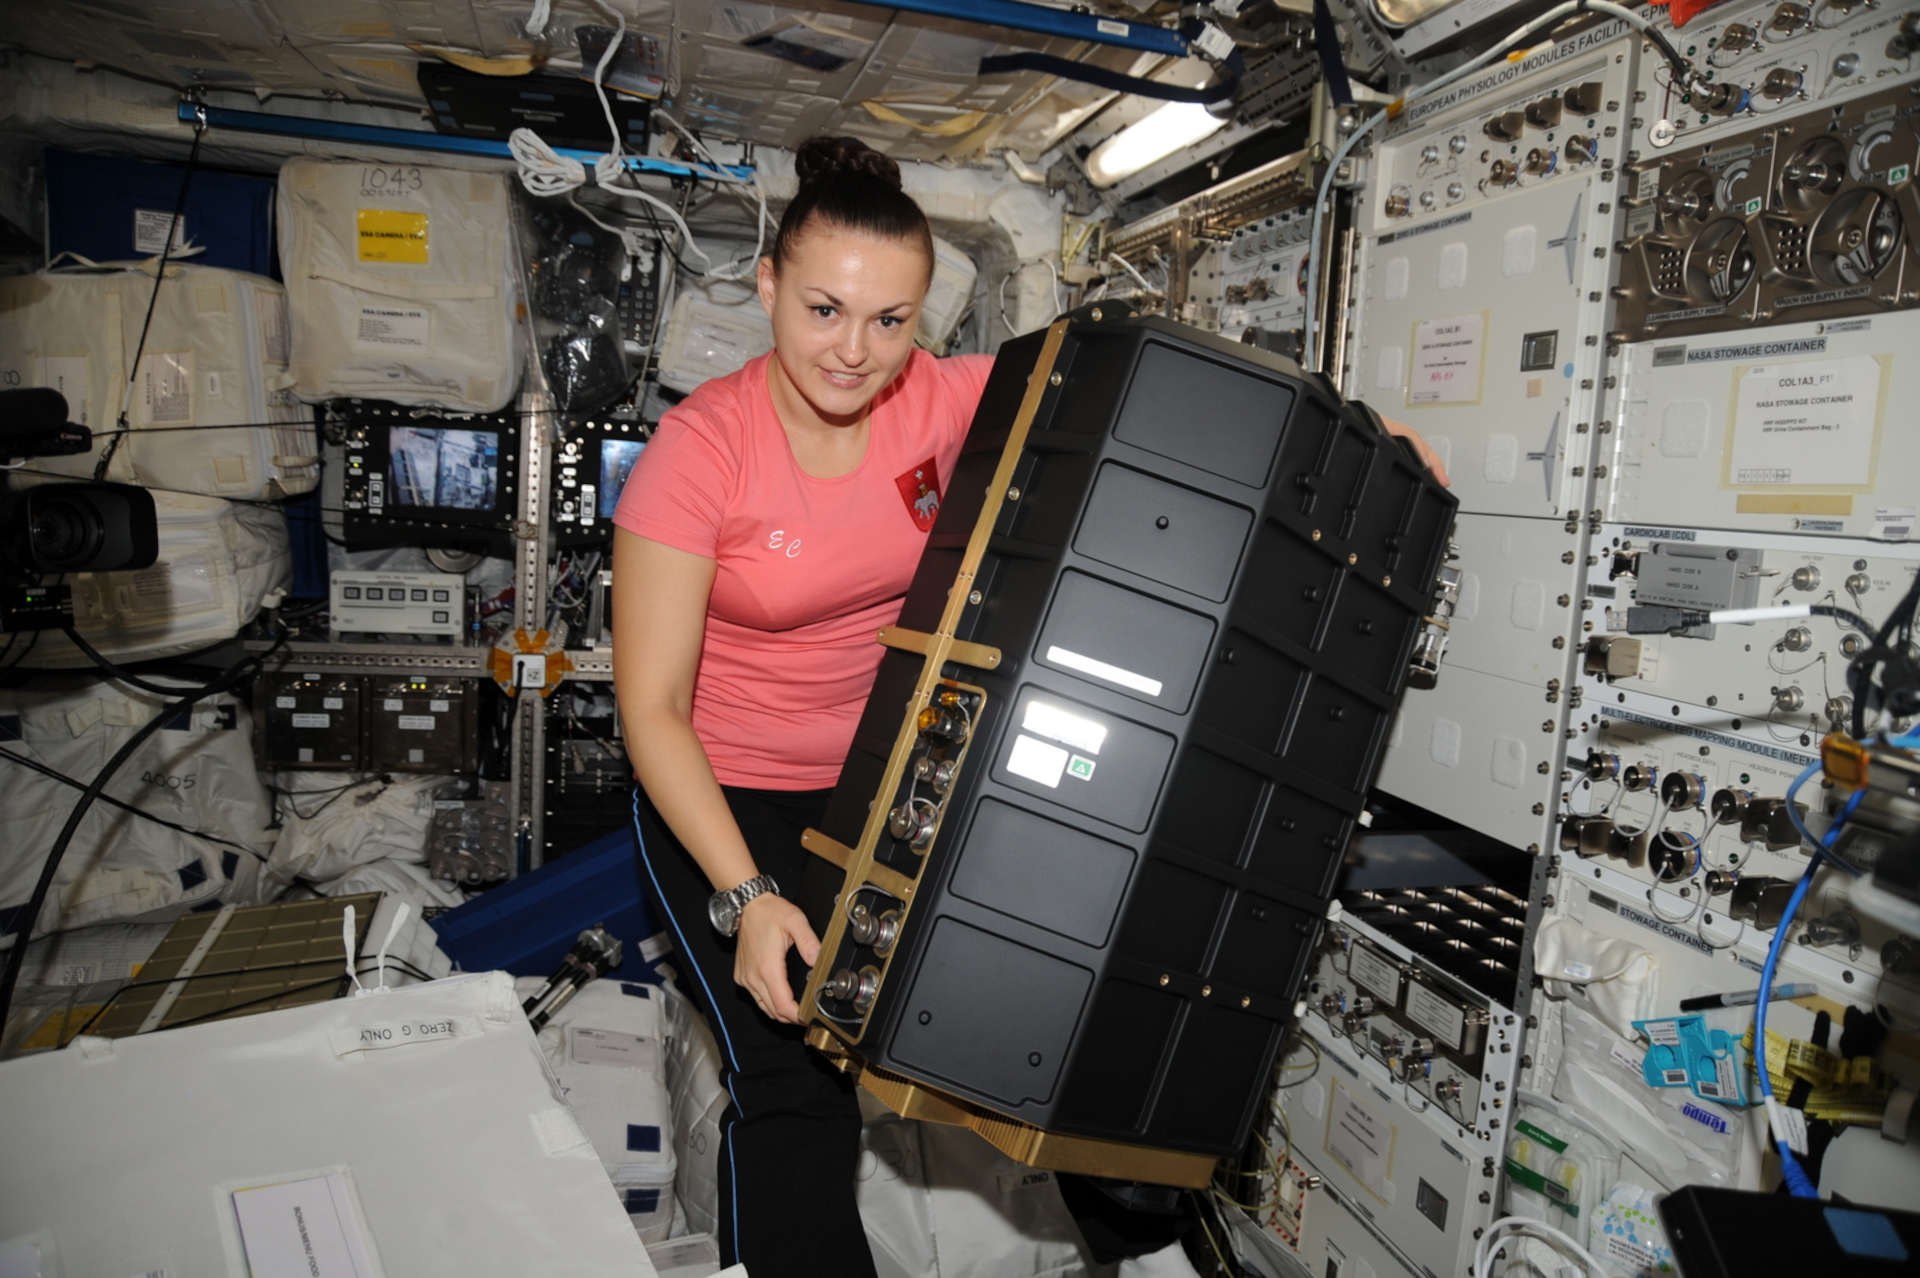 Cosmonaut Elena Serova installing the third laboratory, 'PK-4', in the European Columbus module on the ISS